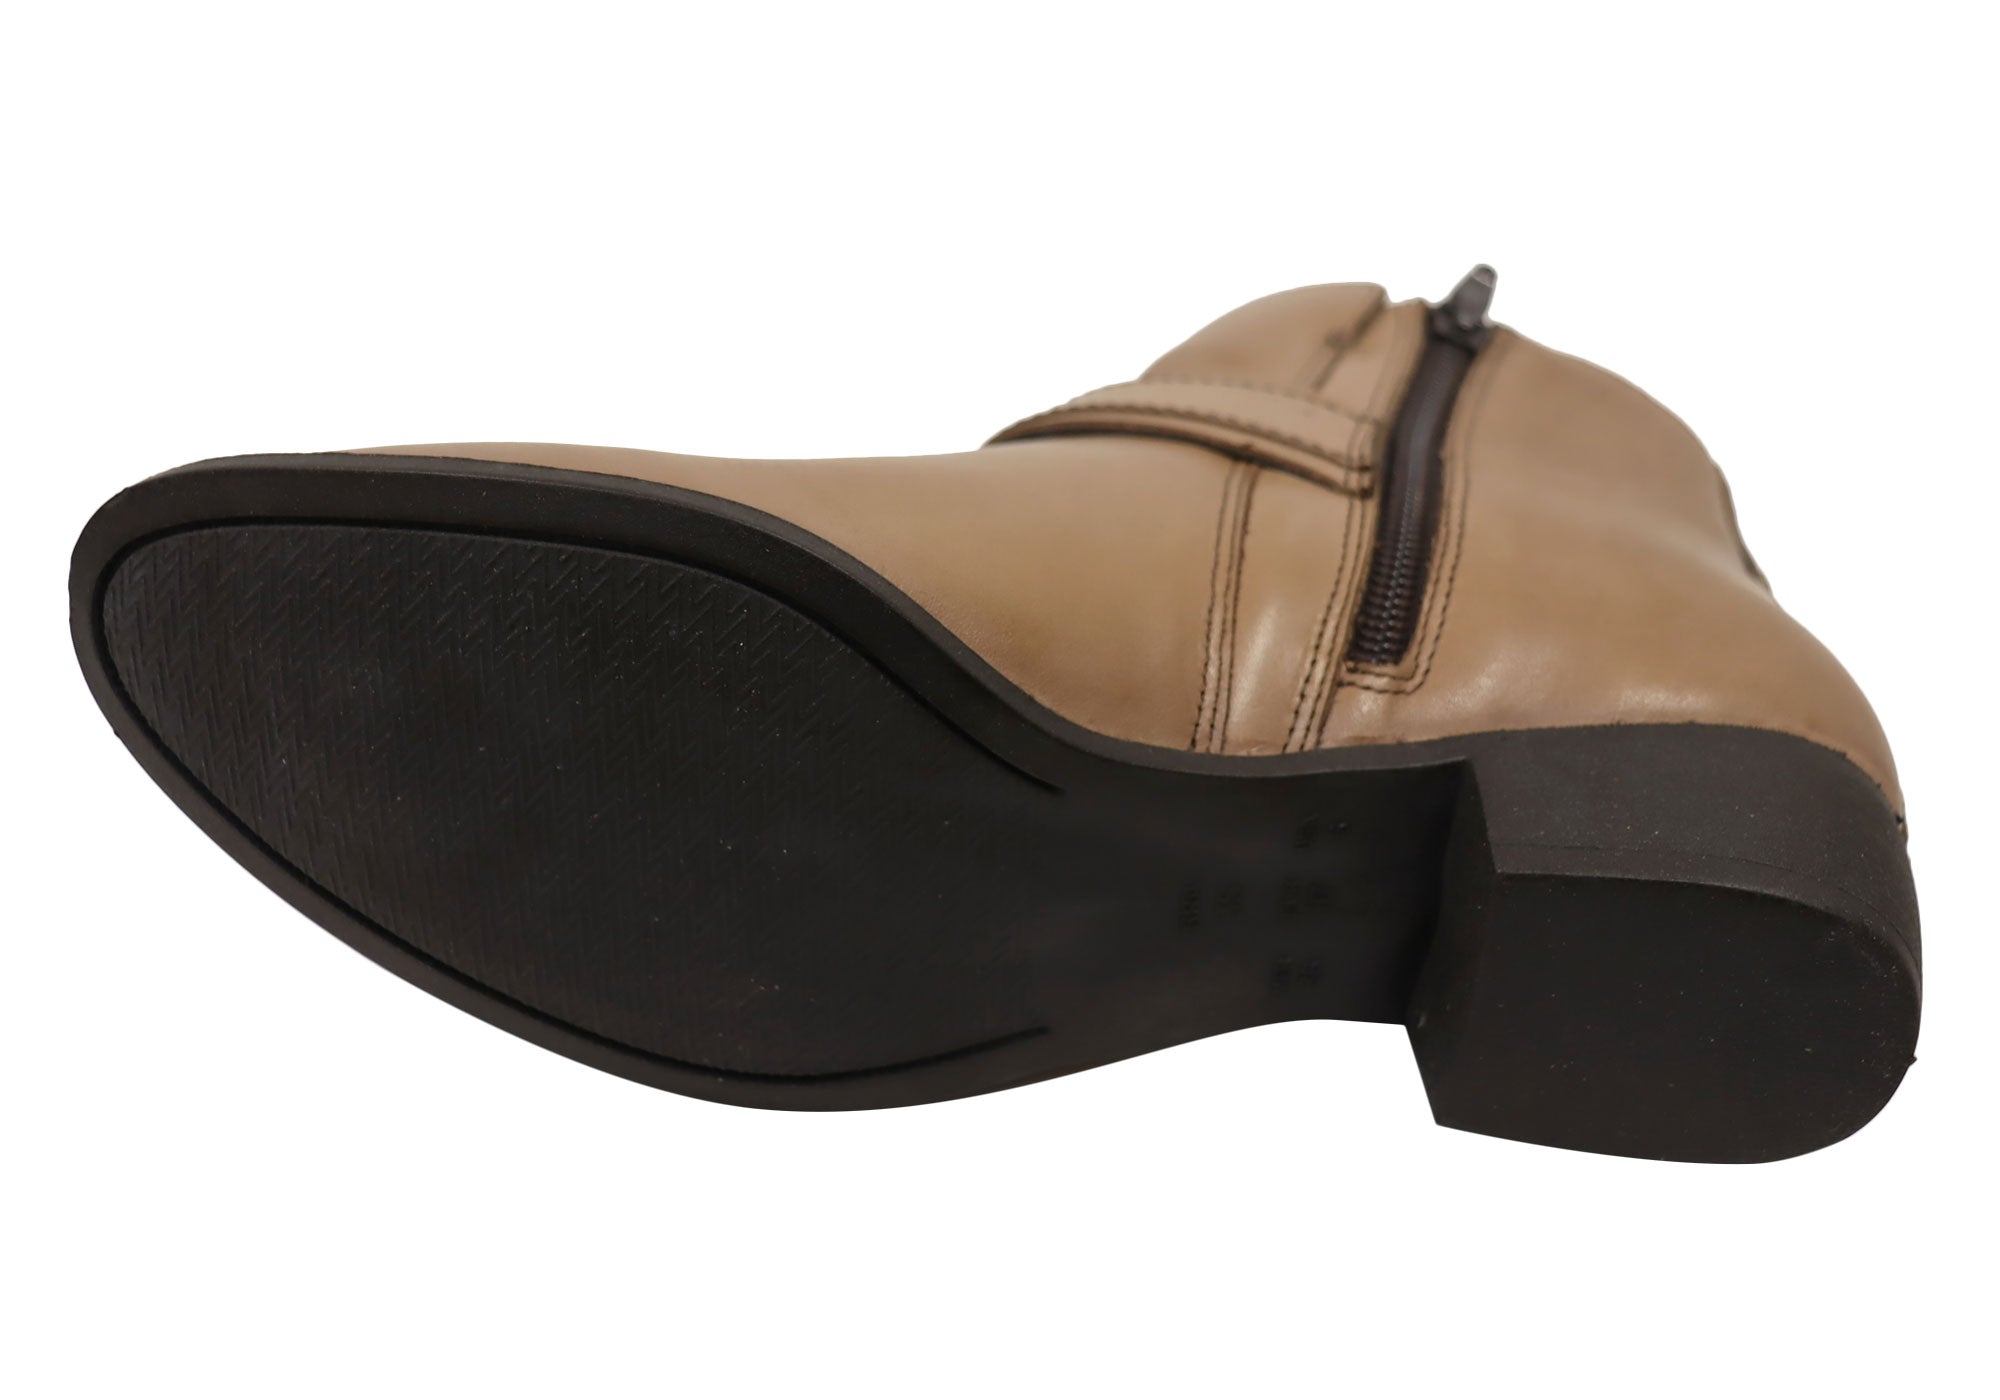 Via Paula Lisa Womens Comfortable Brazilian Leather Ankle Boots